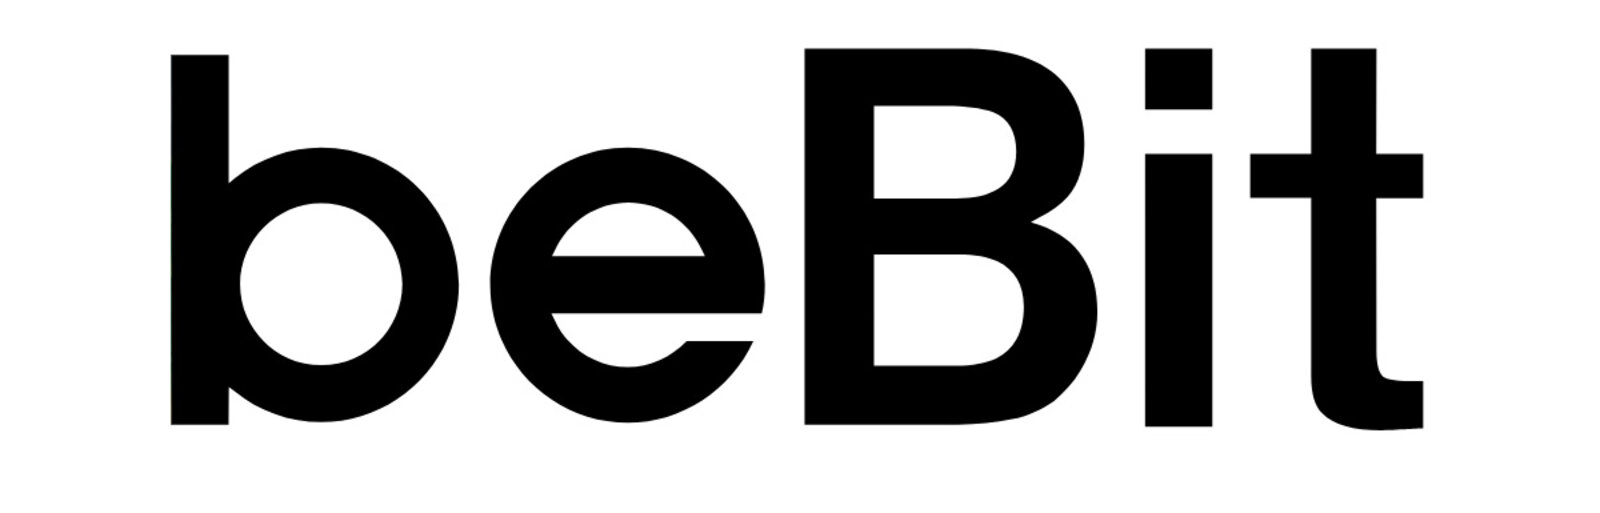 Usergram のビービットが経営共創基盤と業務資本提携し25億円を調達 創業以来初 Web担当者forum